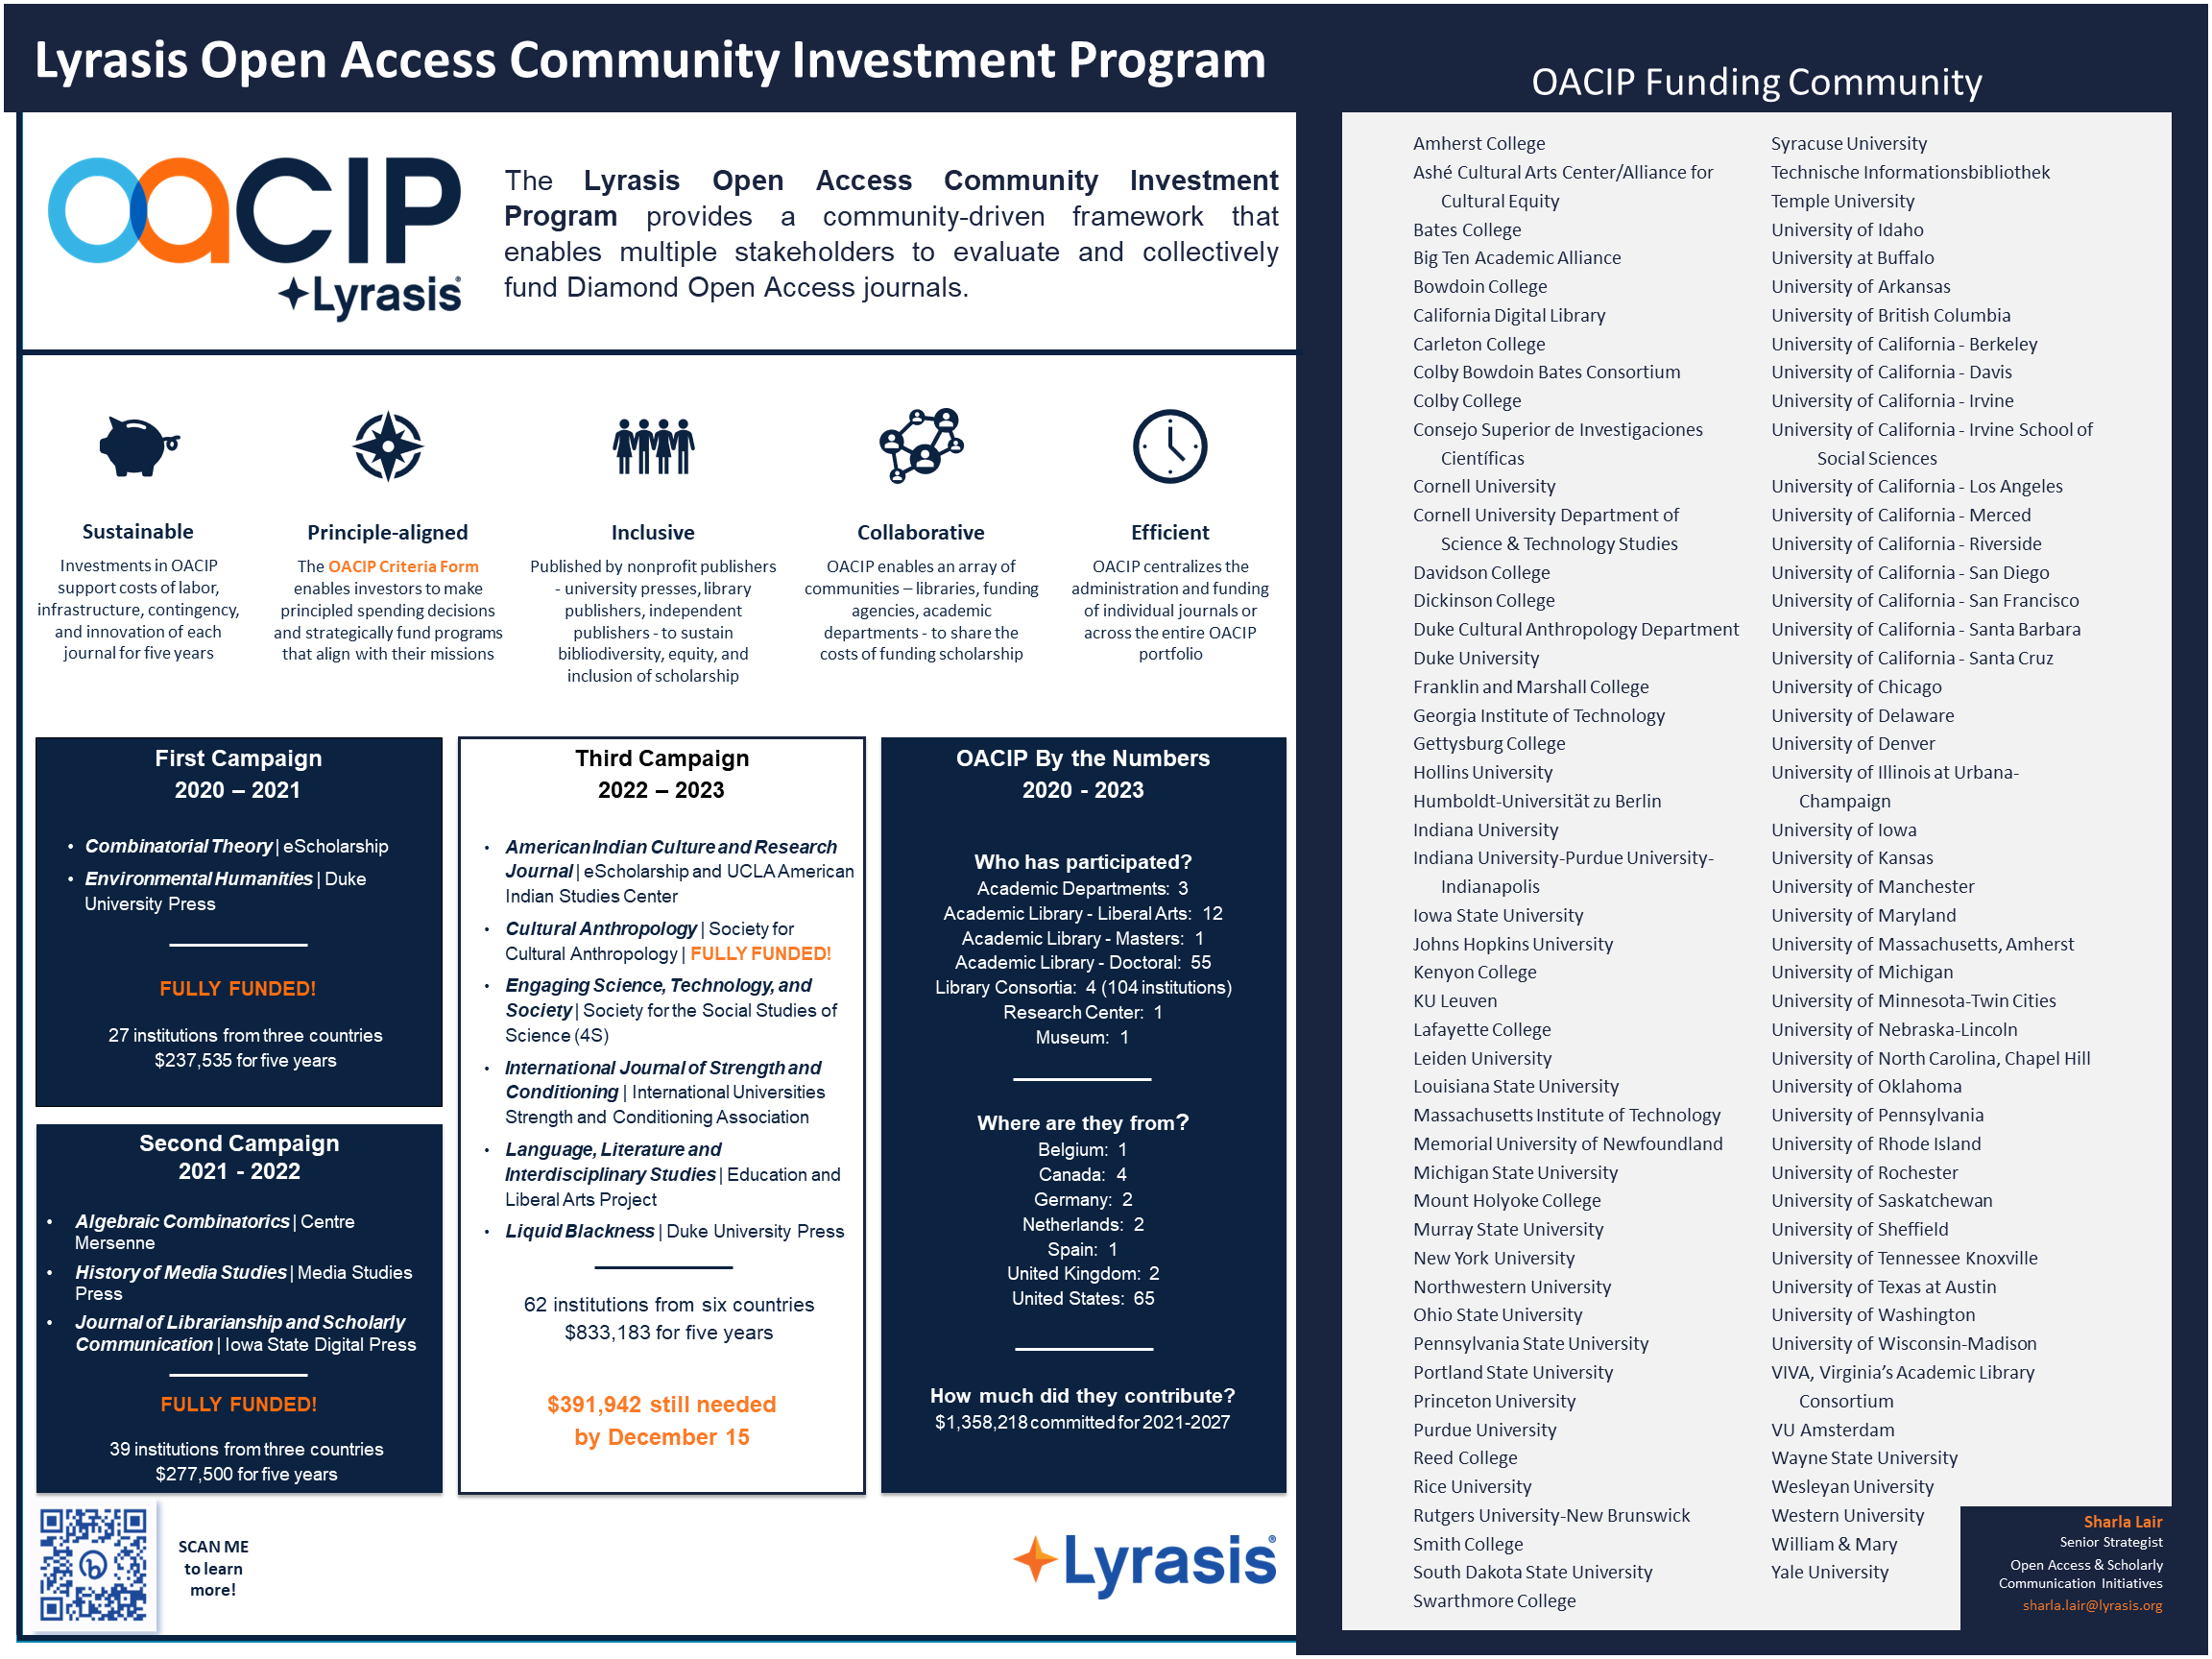 Afiche que presenta 'Lyrasis Open Access Community Investment Program'